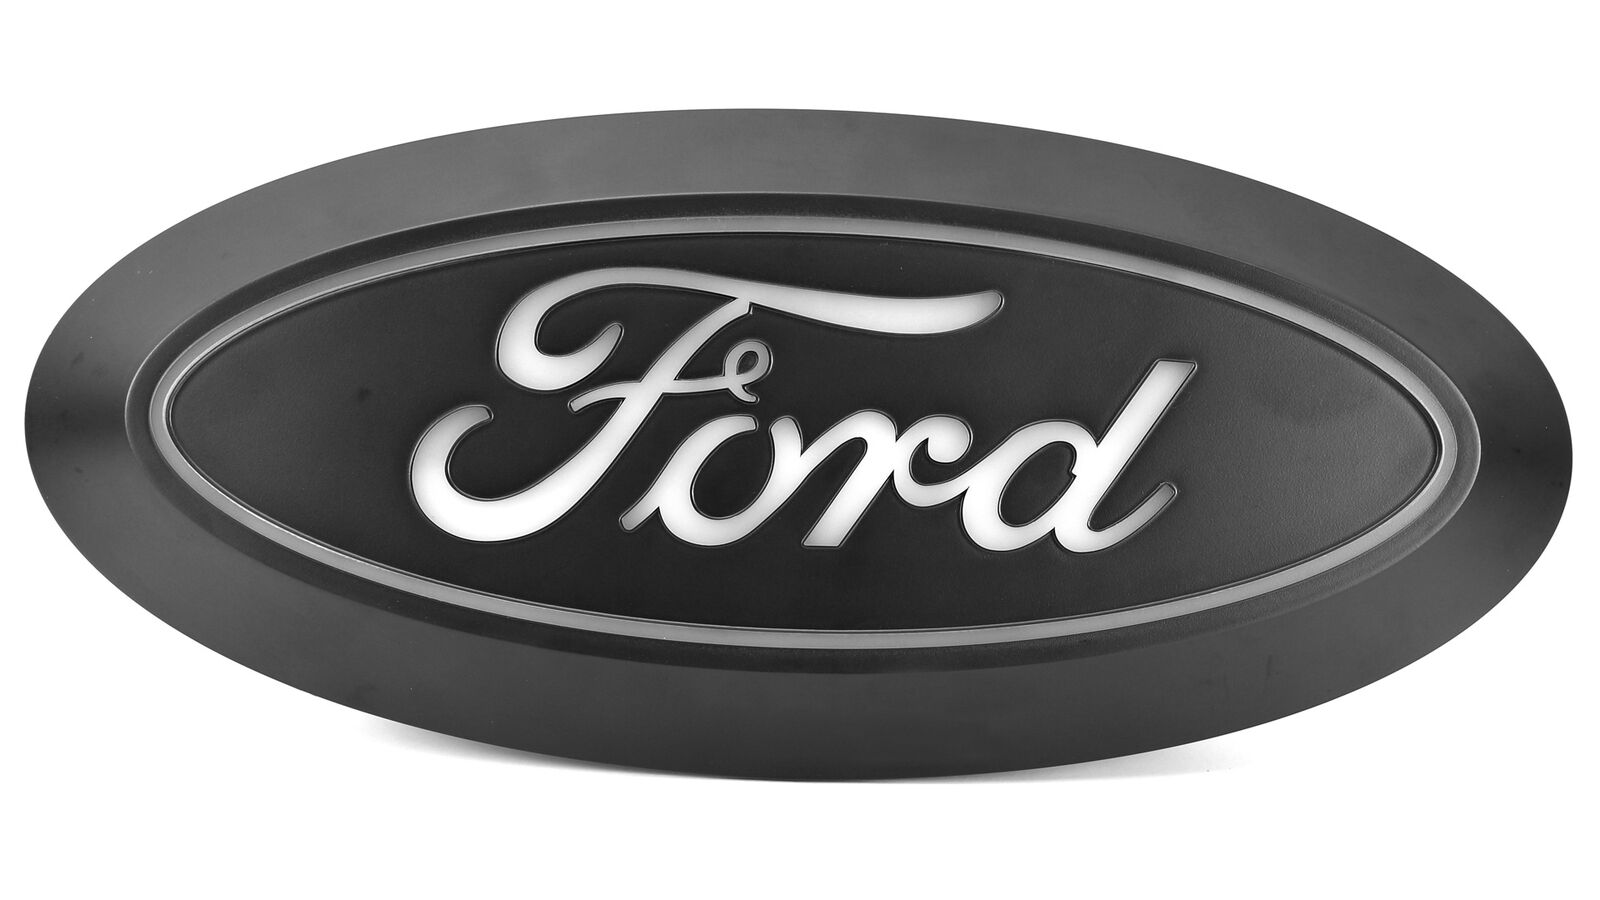 THF Illuminated LED Emblem (15-19) Ford F-150